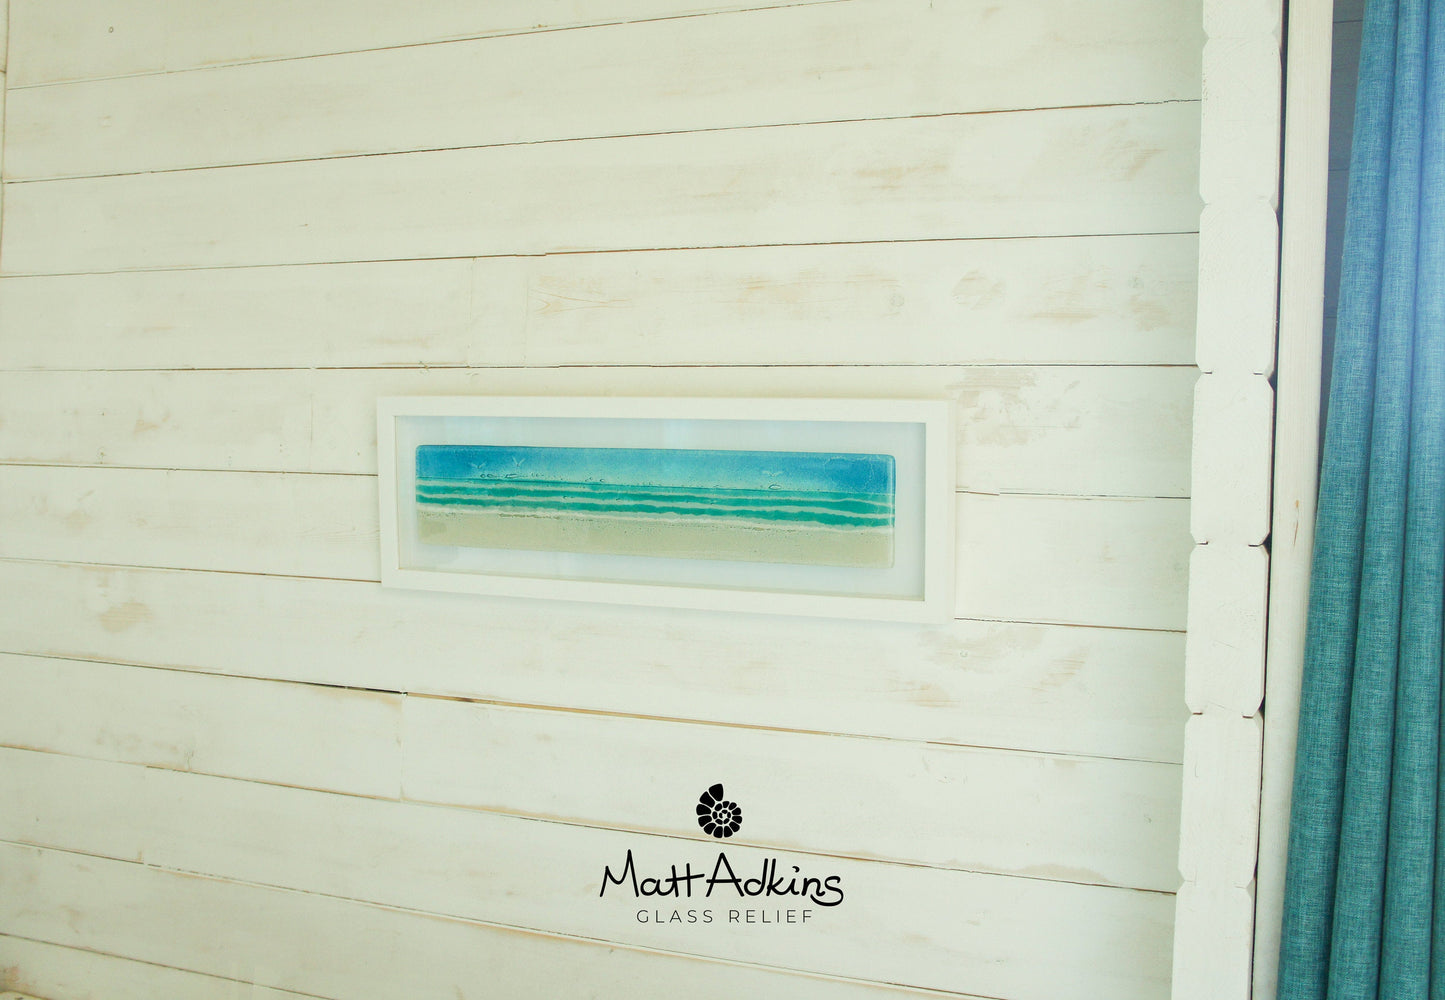 Beach Frame - Panoramic - Turquoise - 60x20cm(23 1/2x8")